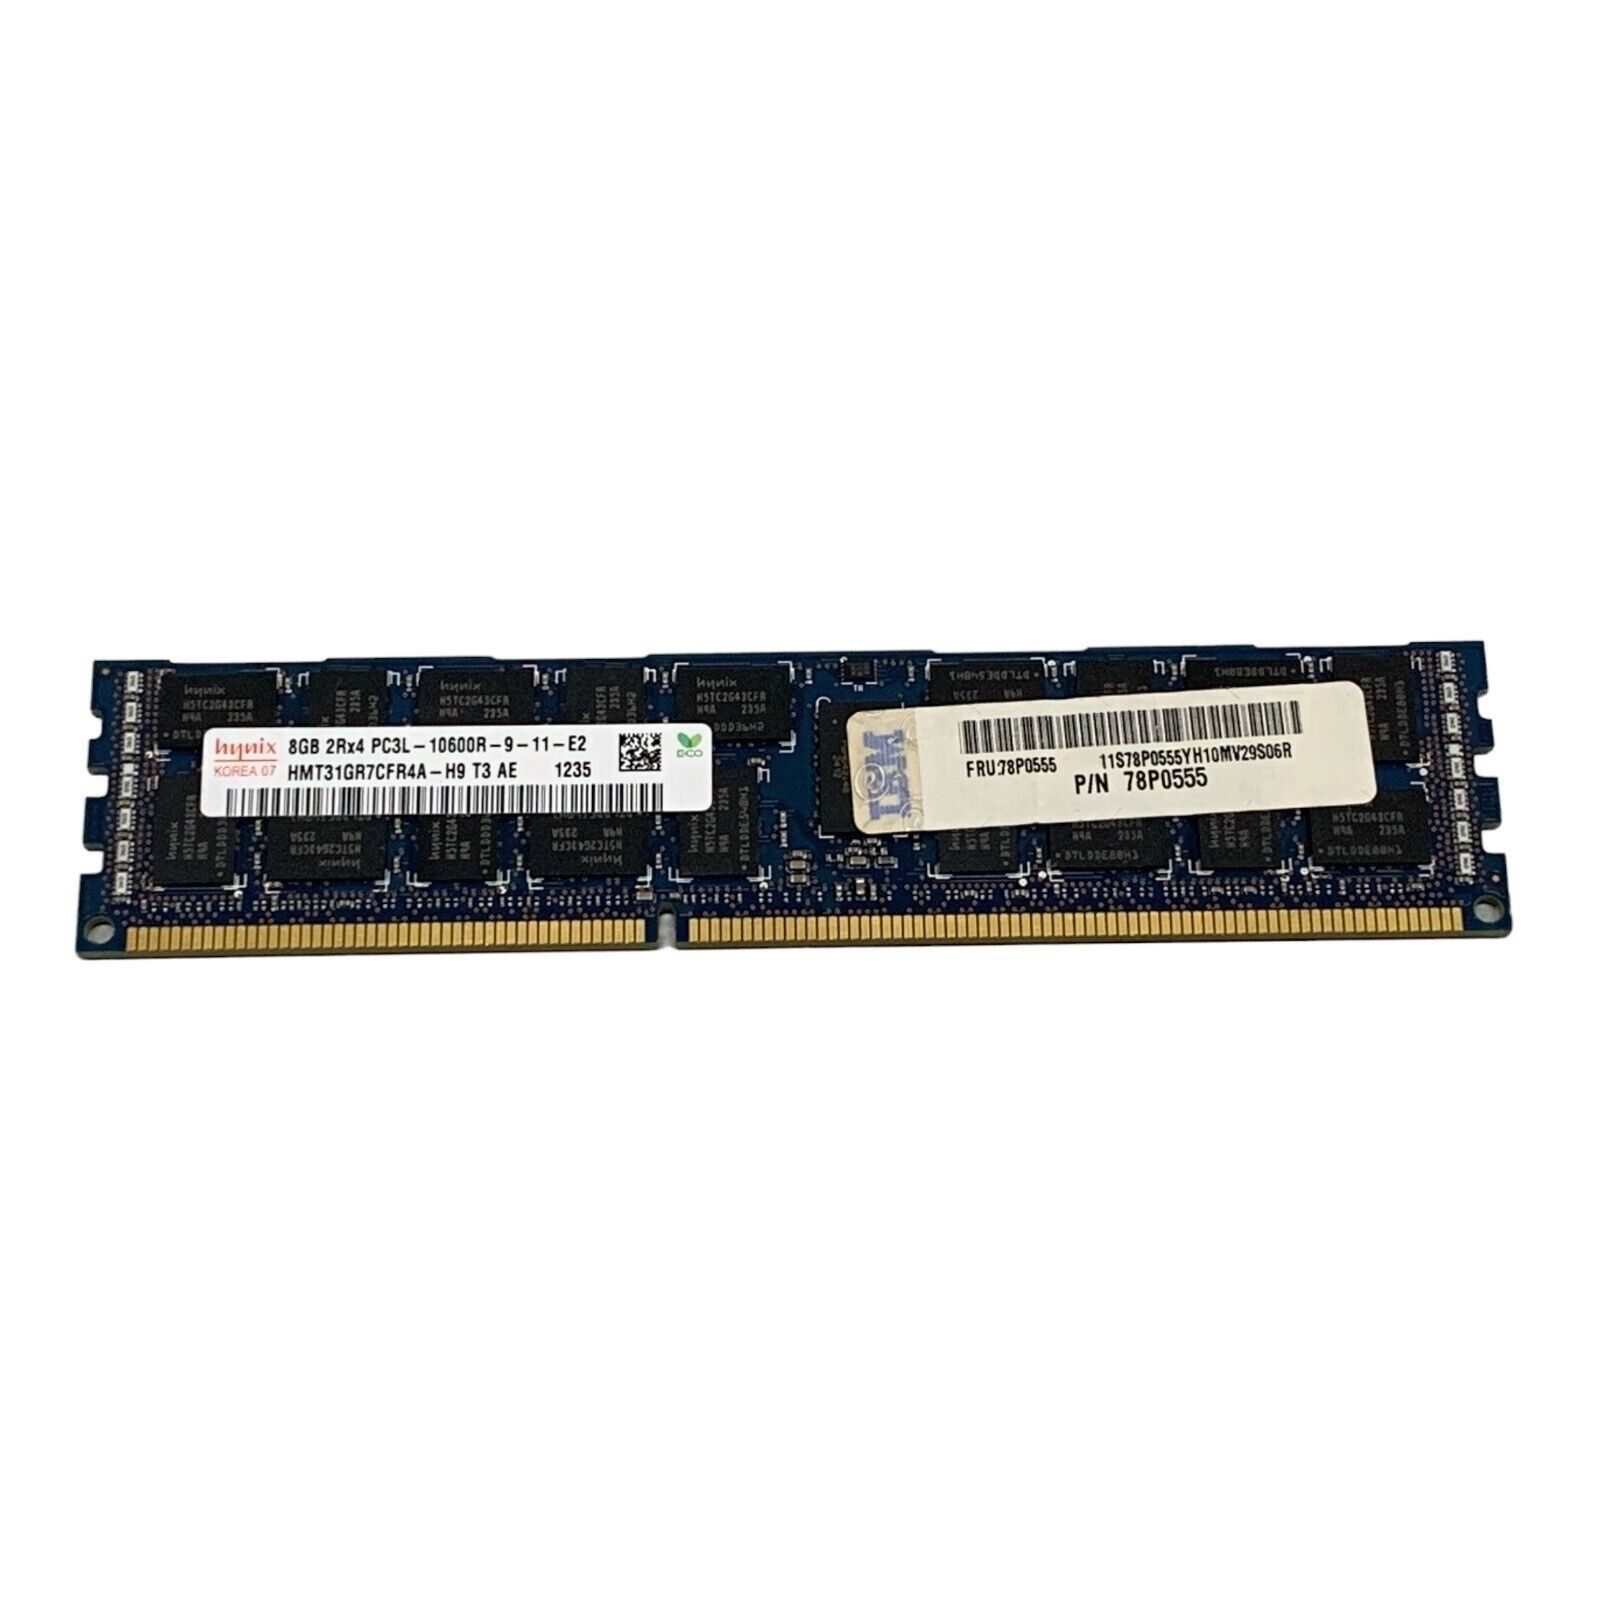 Hynix IBM Certified 32GB 4x 8GB 2Rx4 PC3L-10600R DDR3 ECC Server Memory RAM